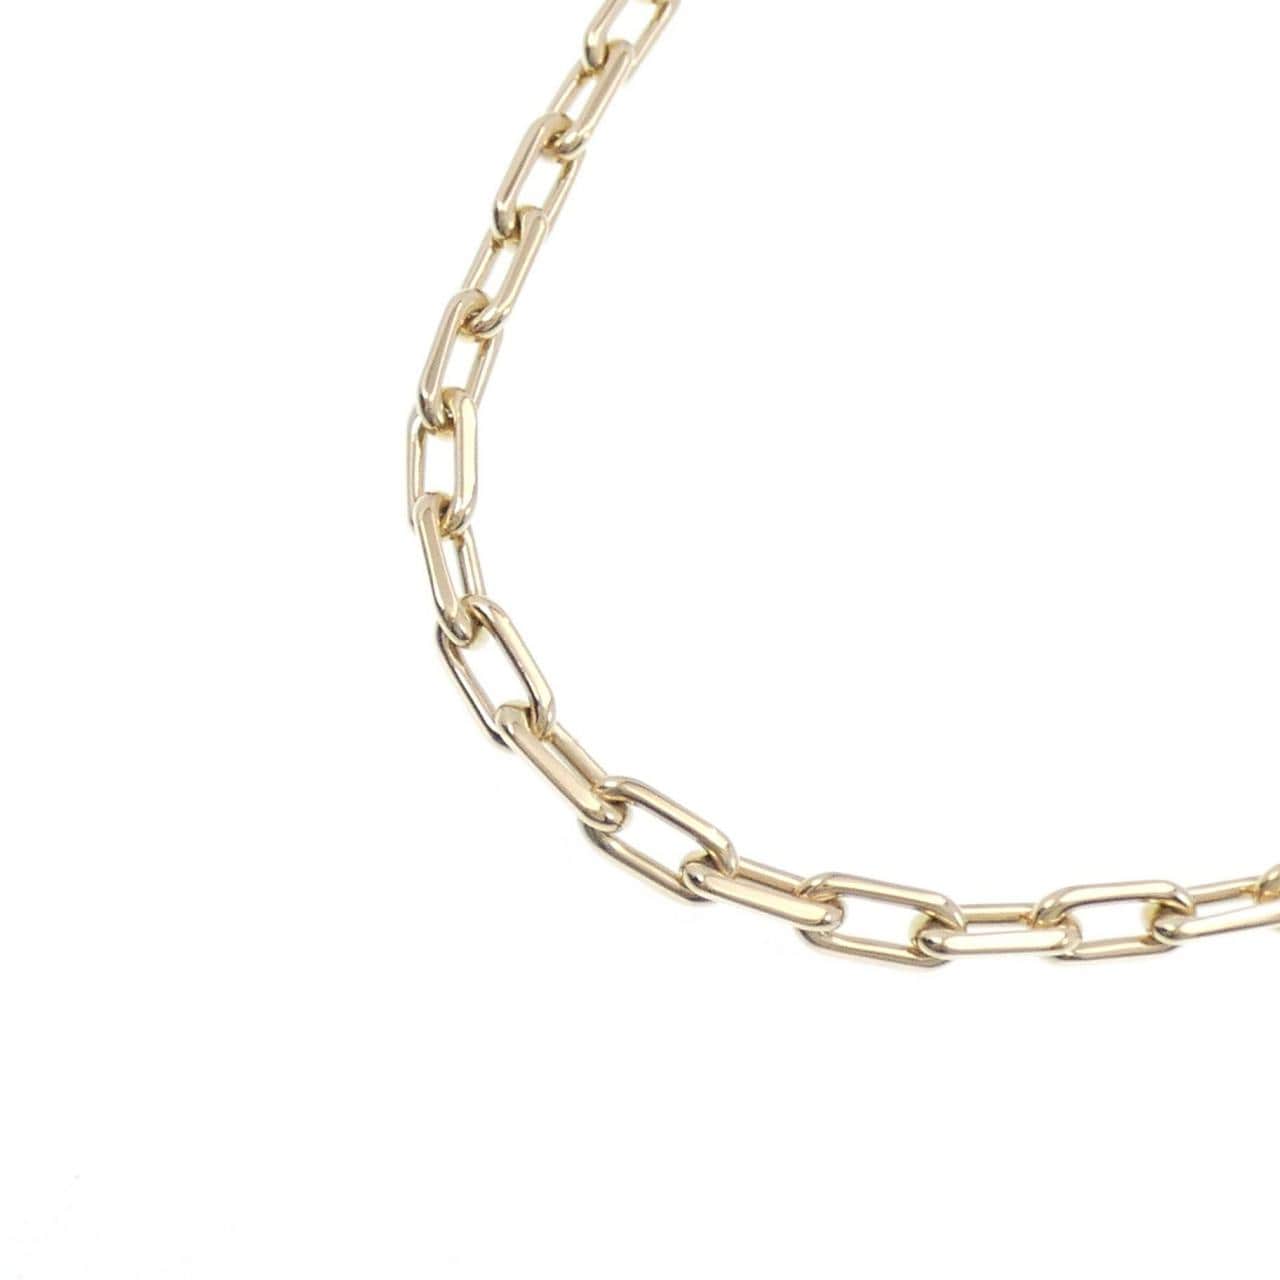 Cartier Spartacus necklace